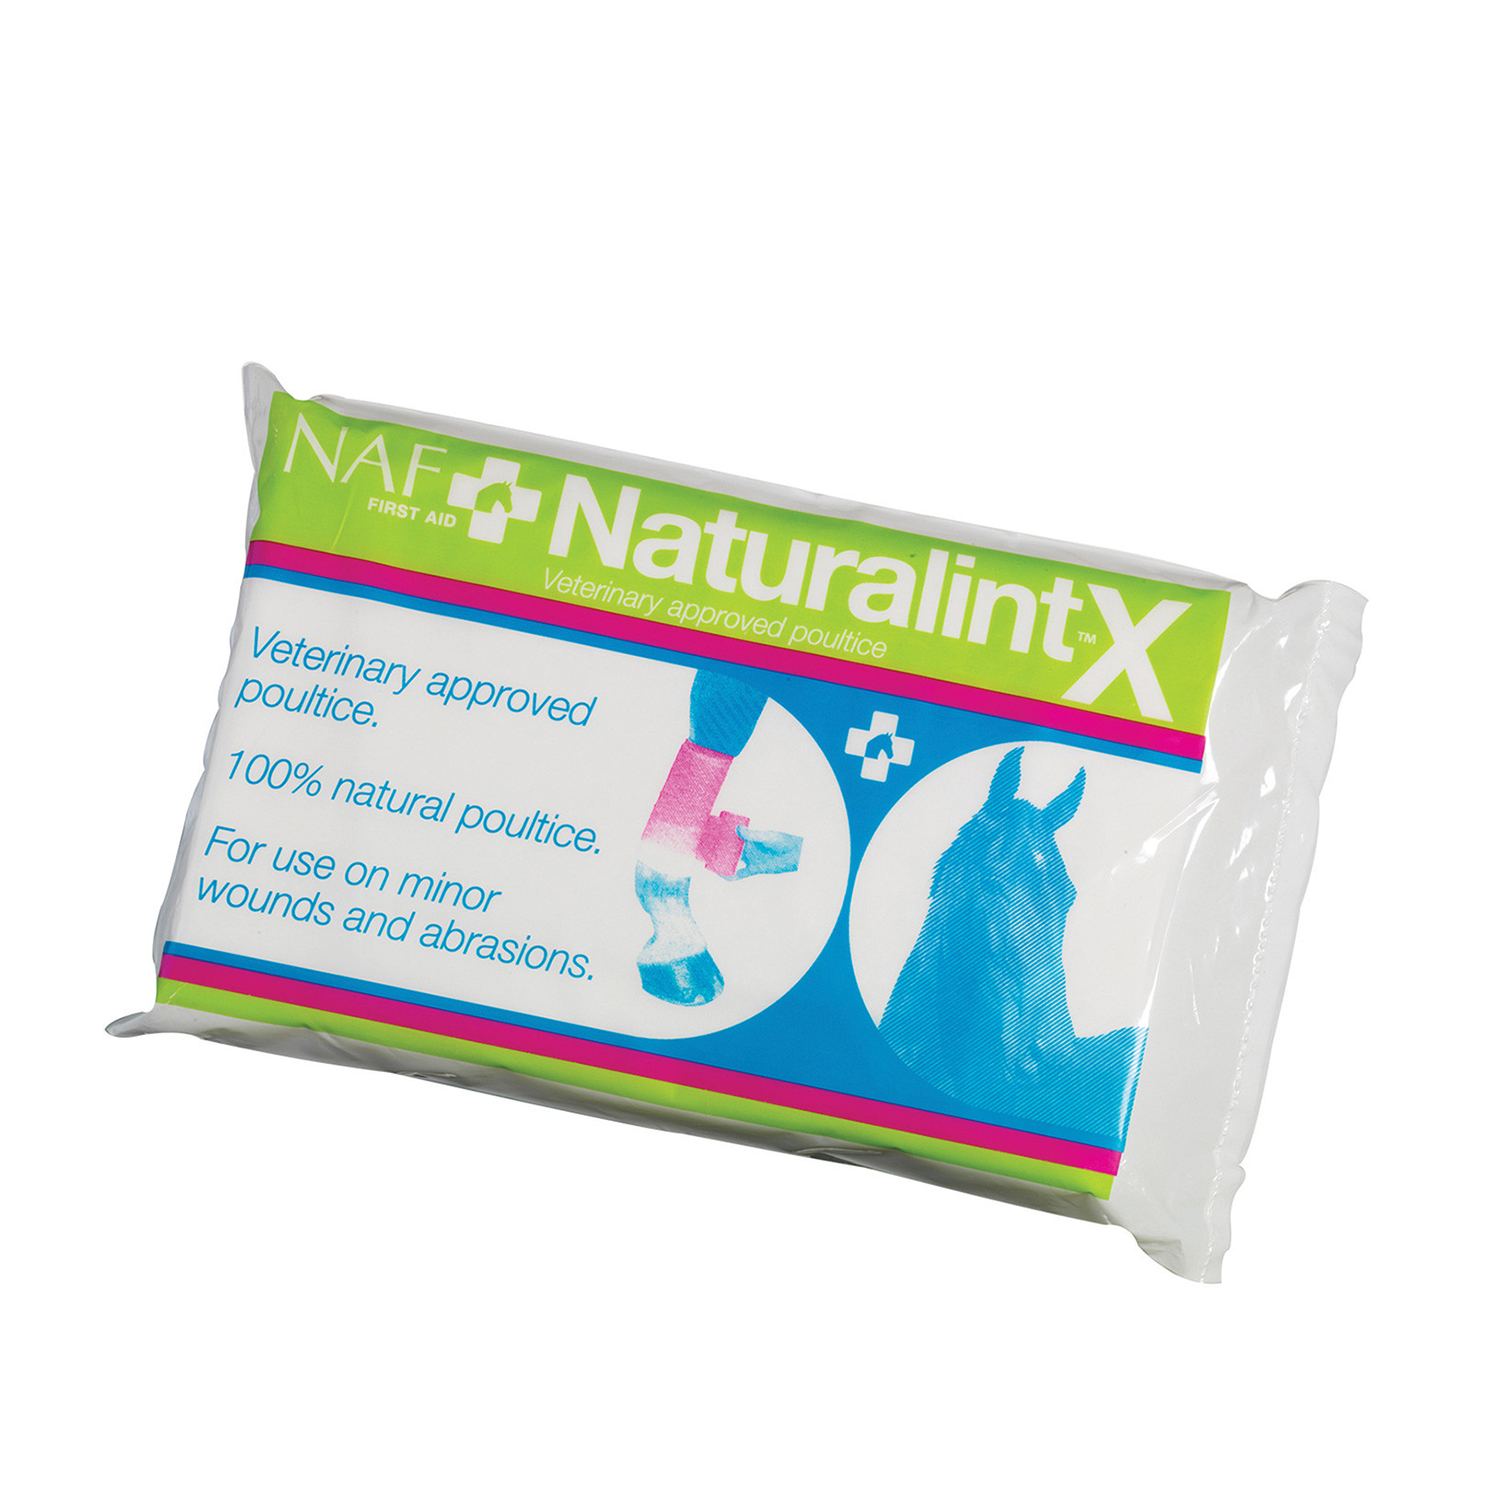 Naturalintx multikompress